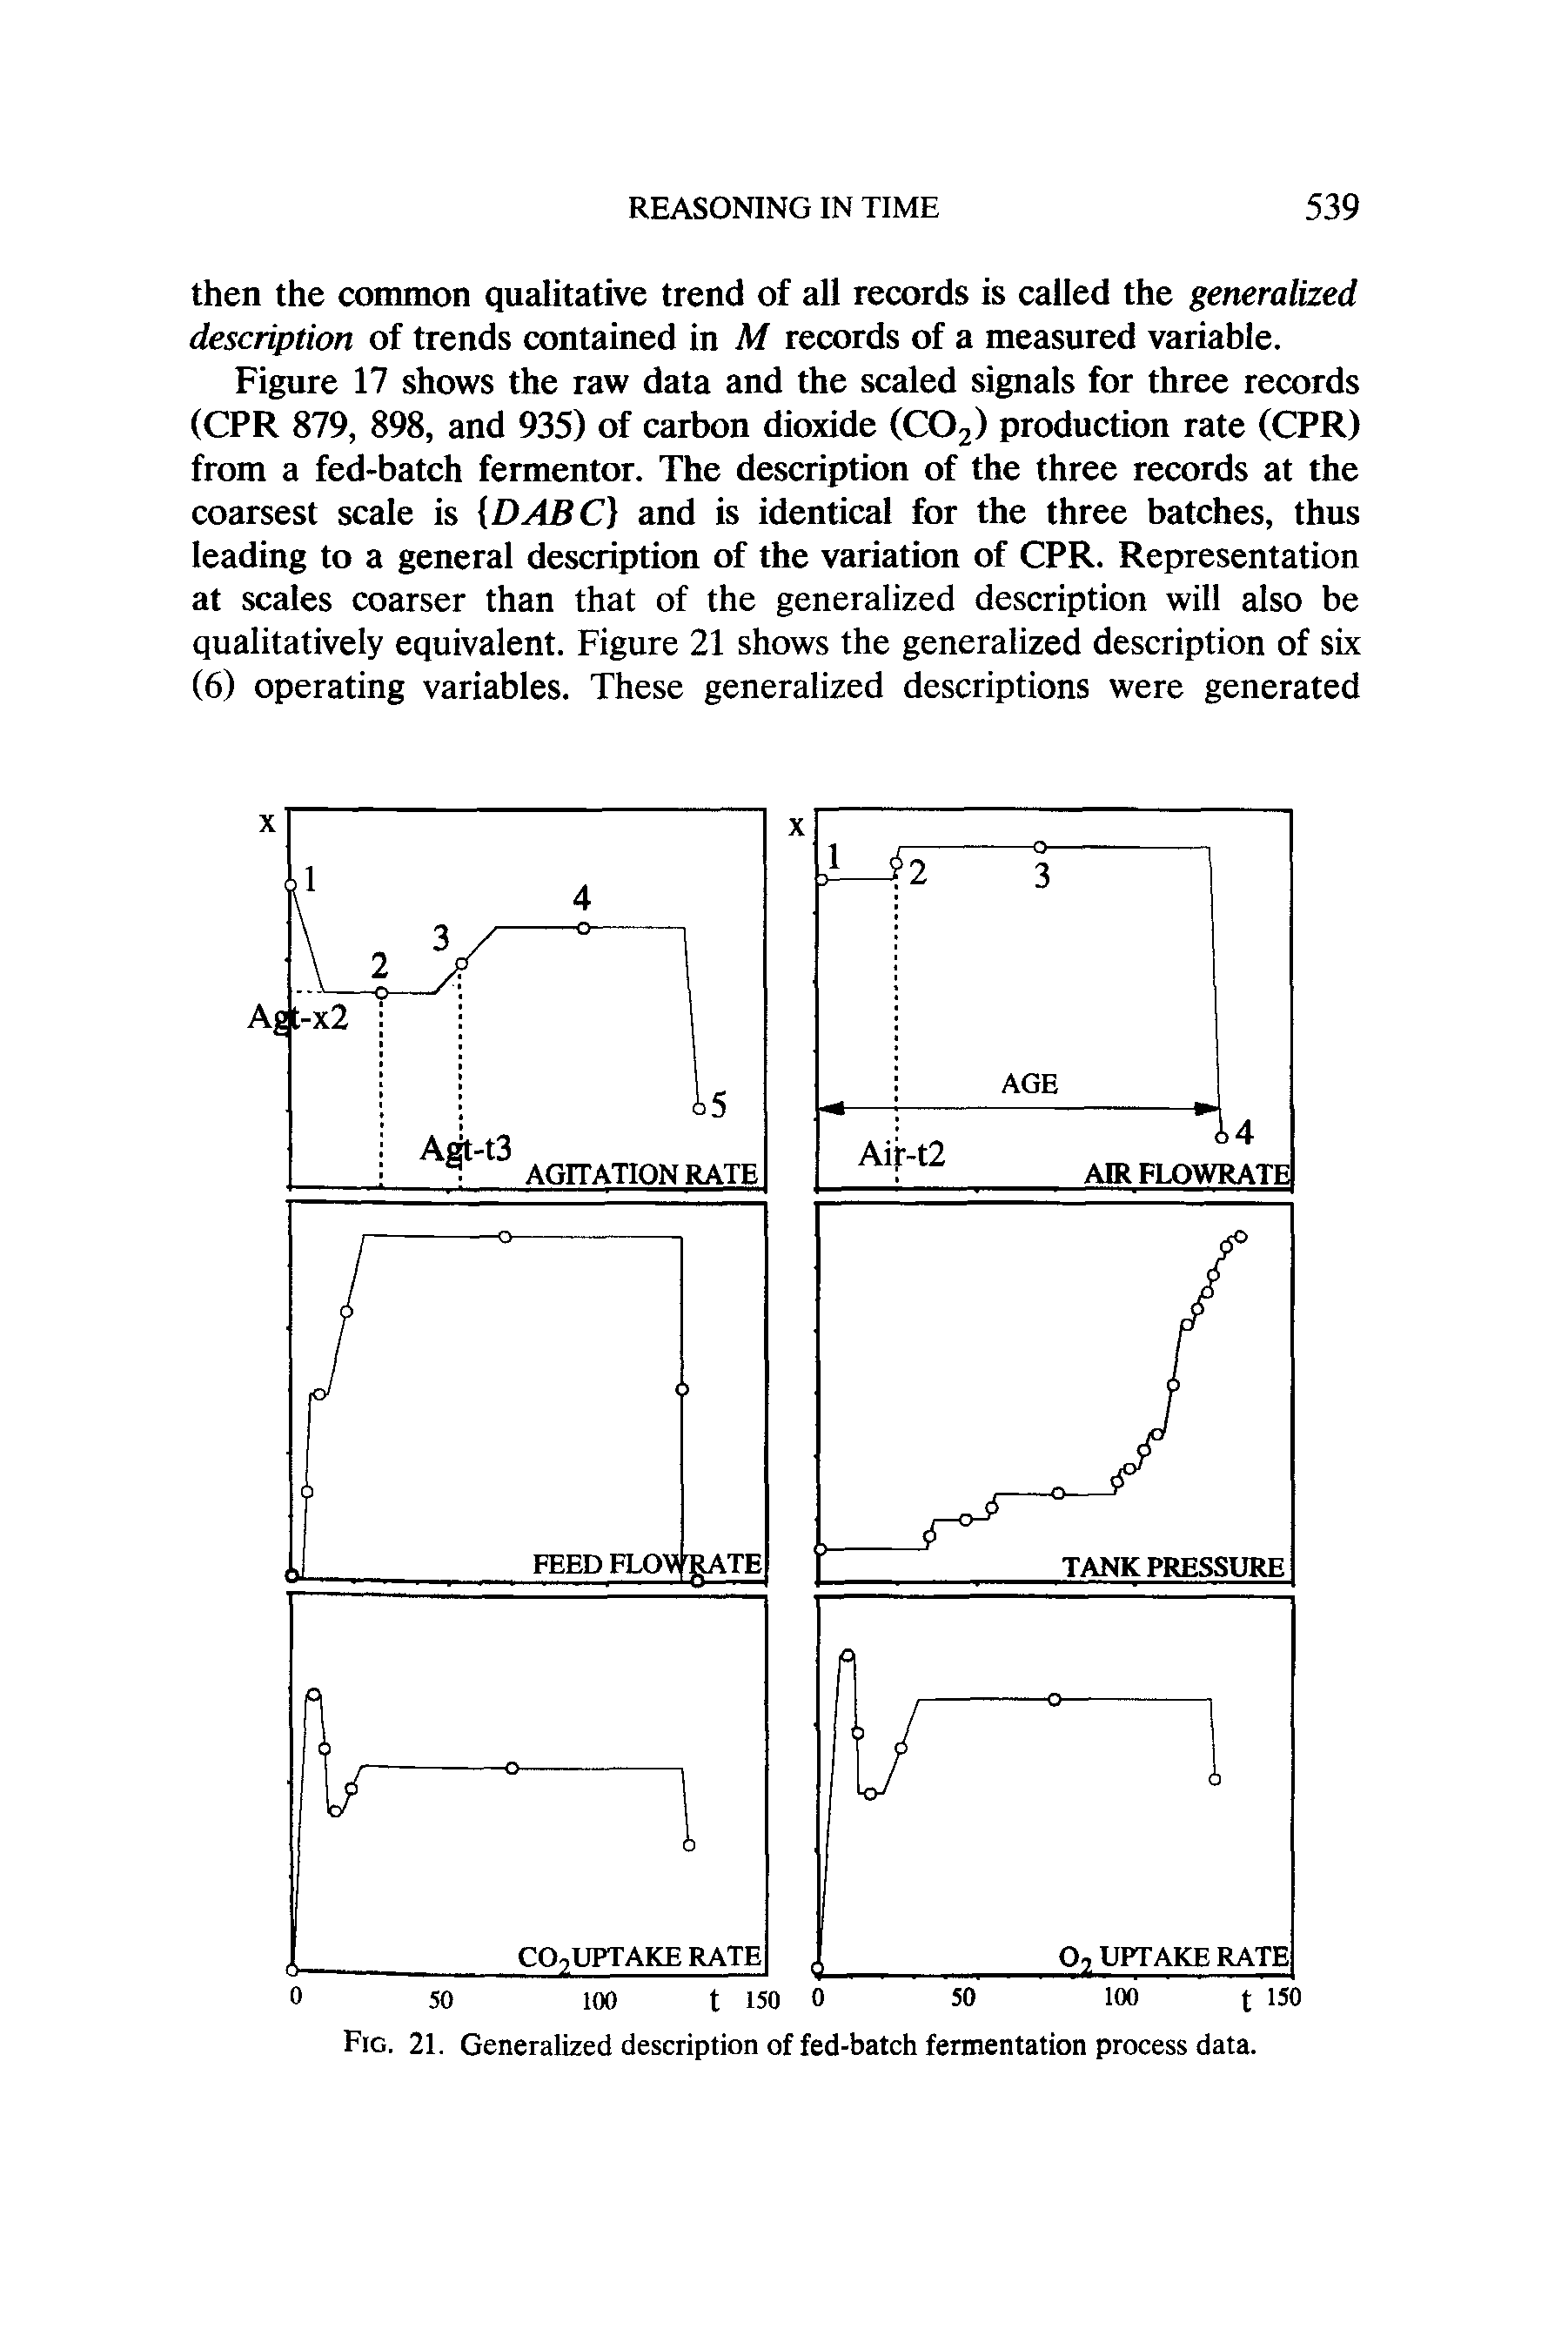 Fig. 21. Generalized description of fed-batch fermentation process data.